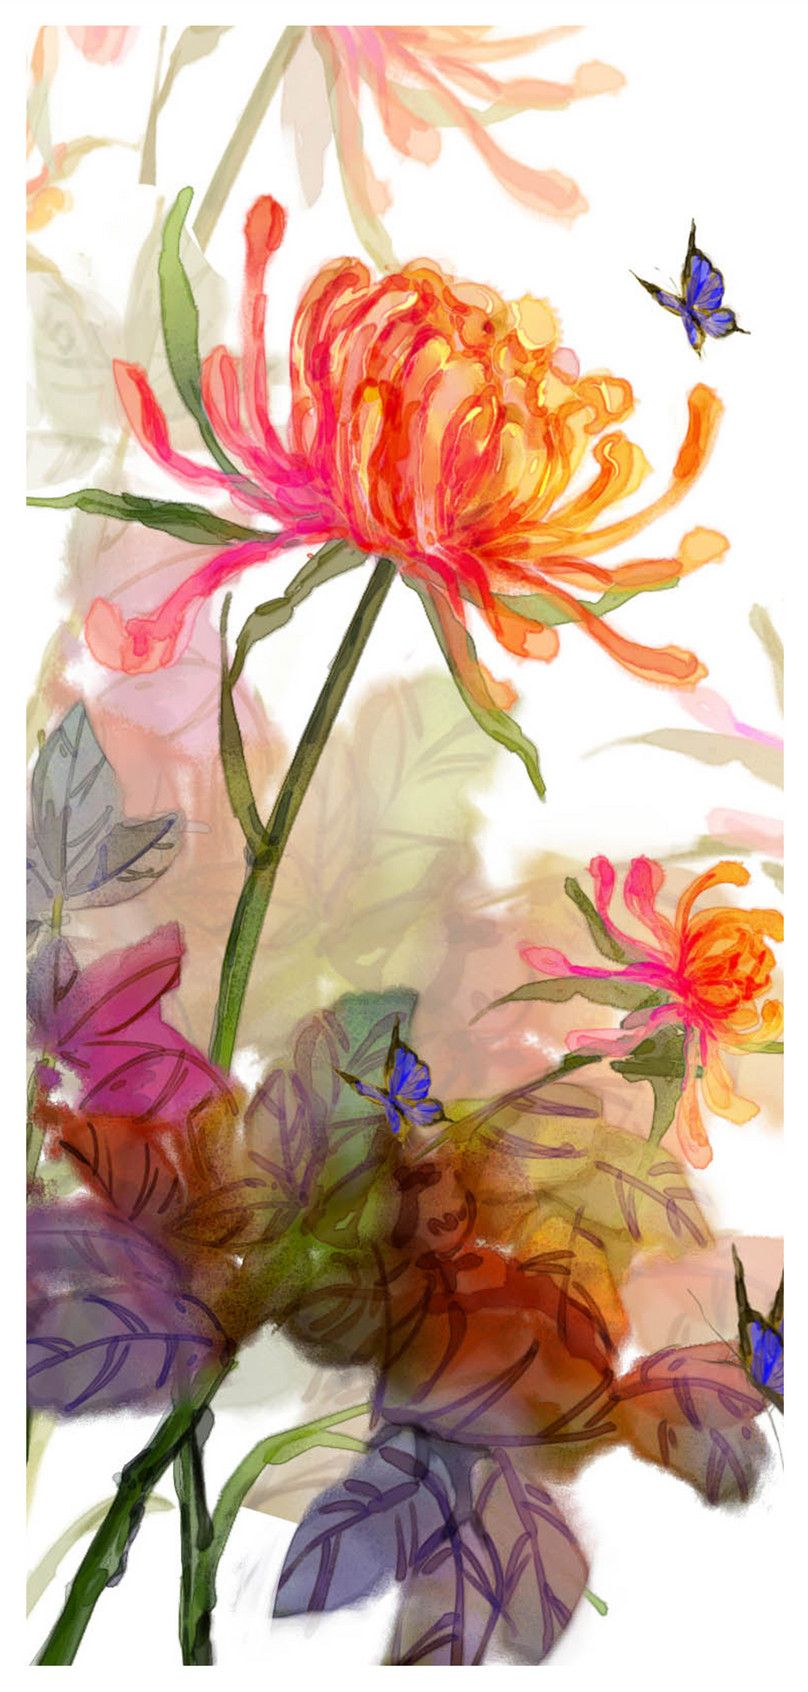 ink flower mobile wallpaper background image free download